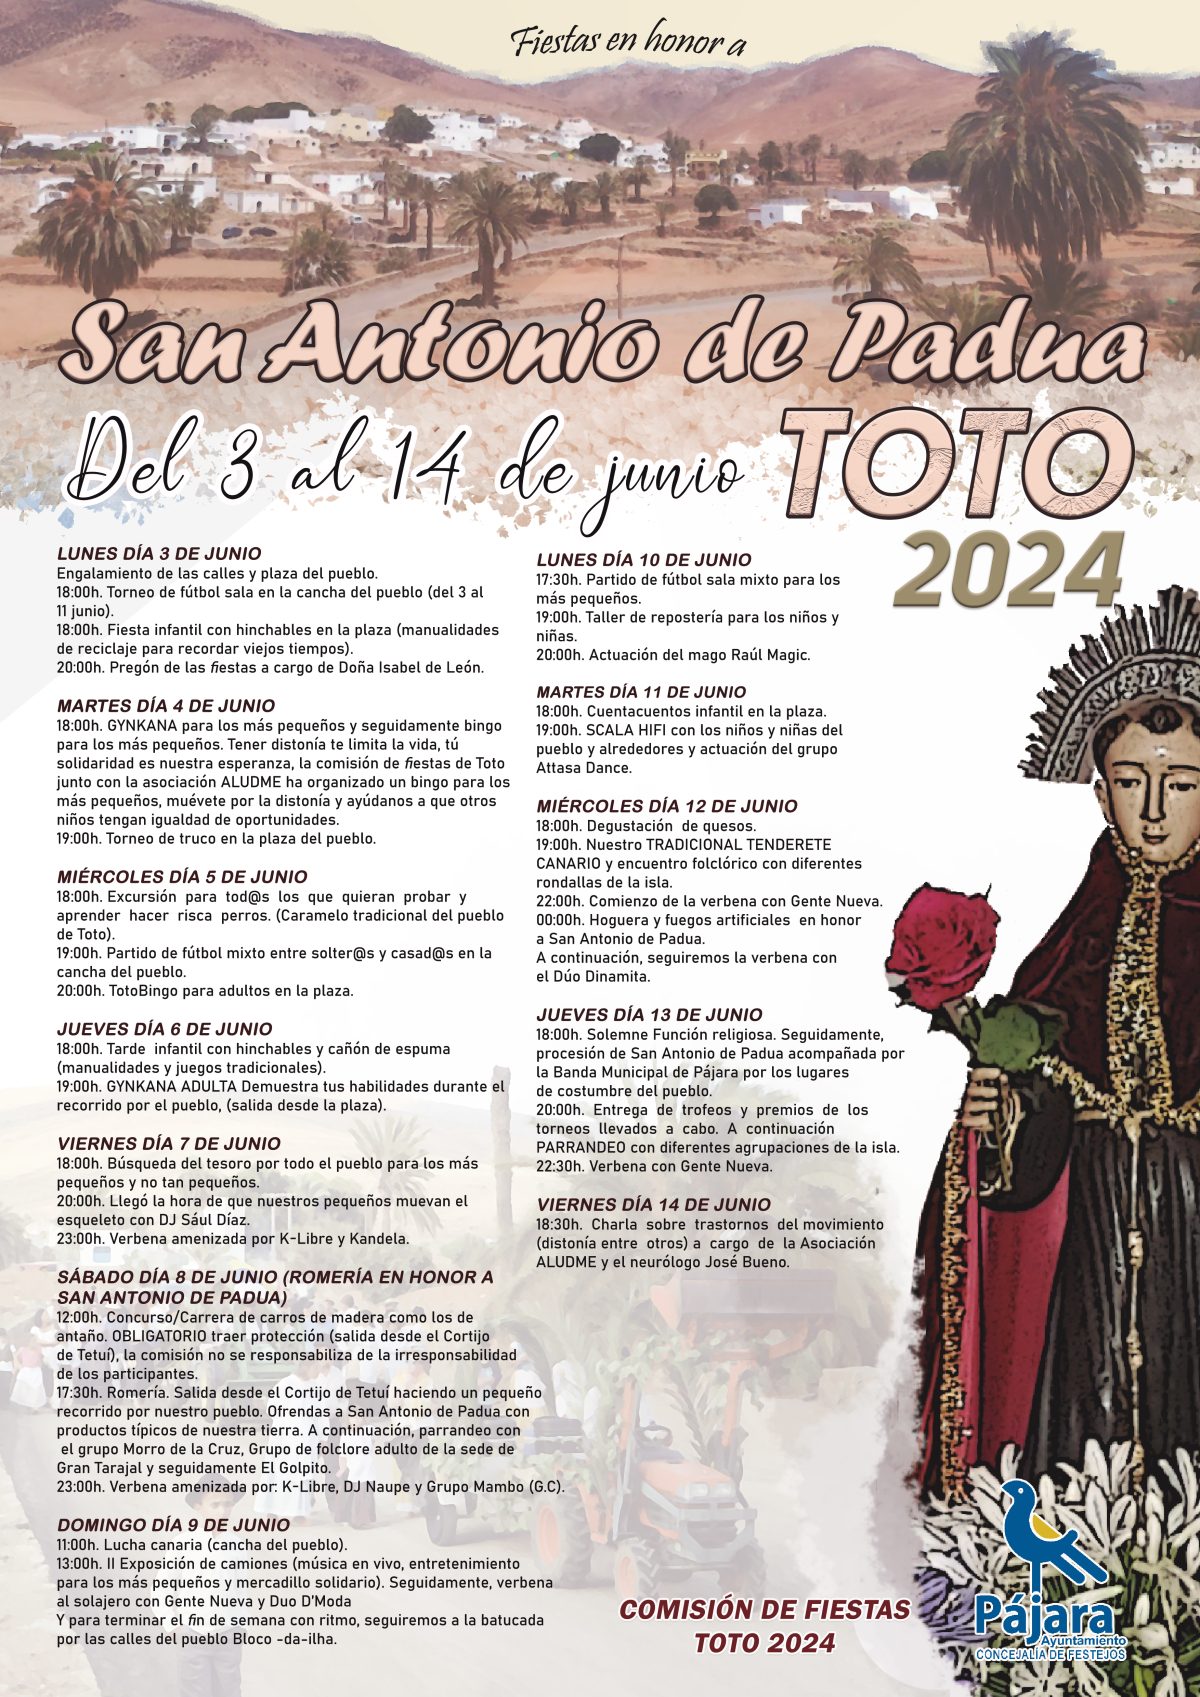 Pájara celebra las Fiestas de Toto 2024 en honor a San Antonio de Padua